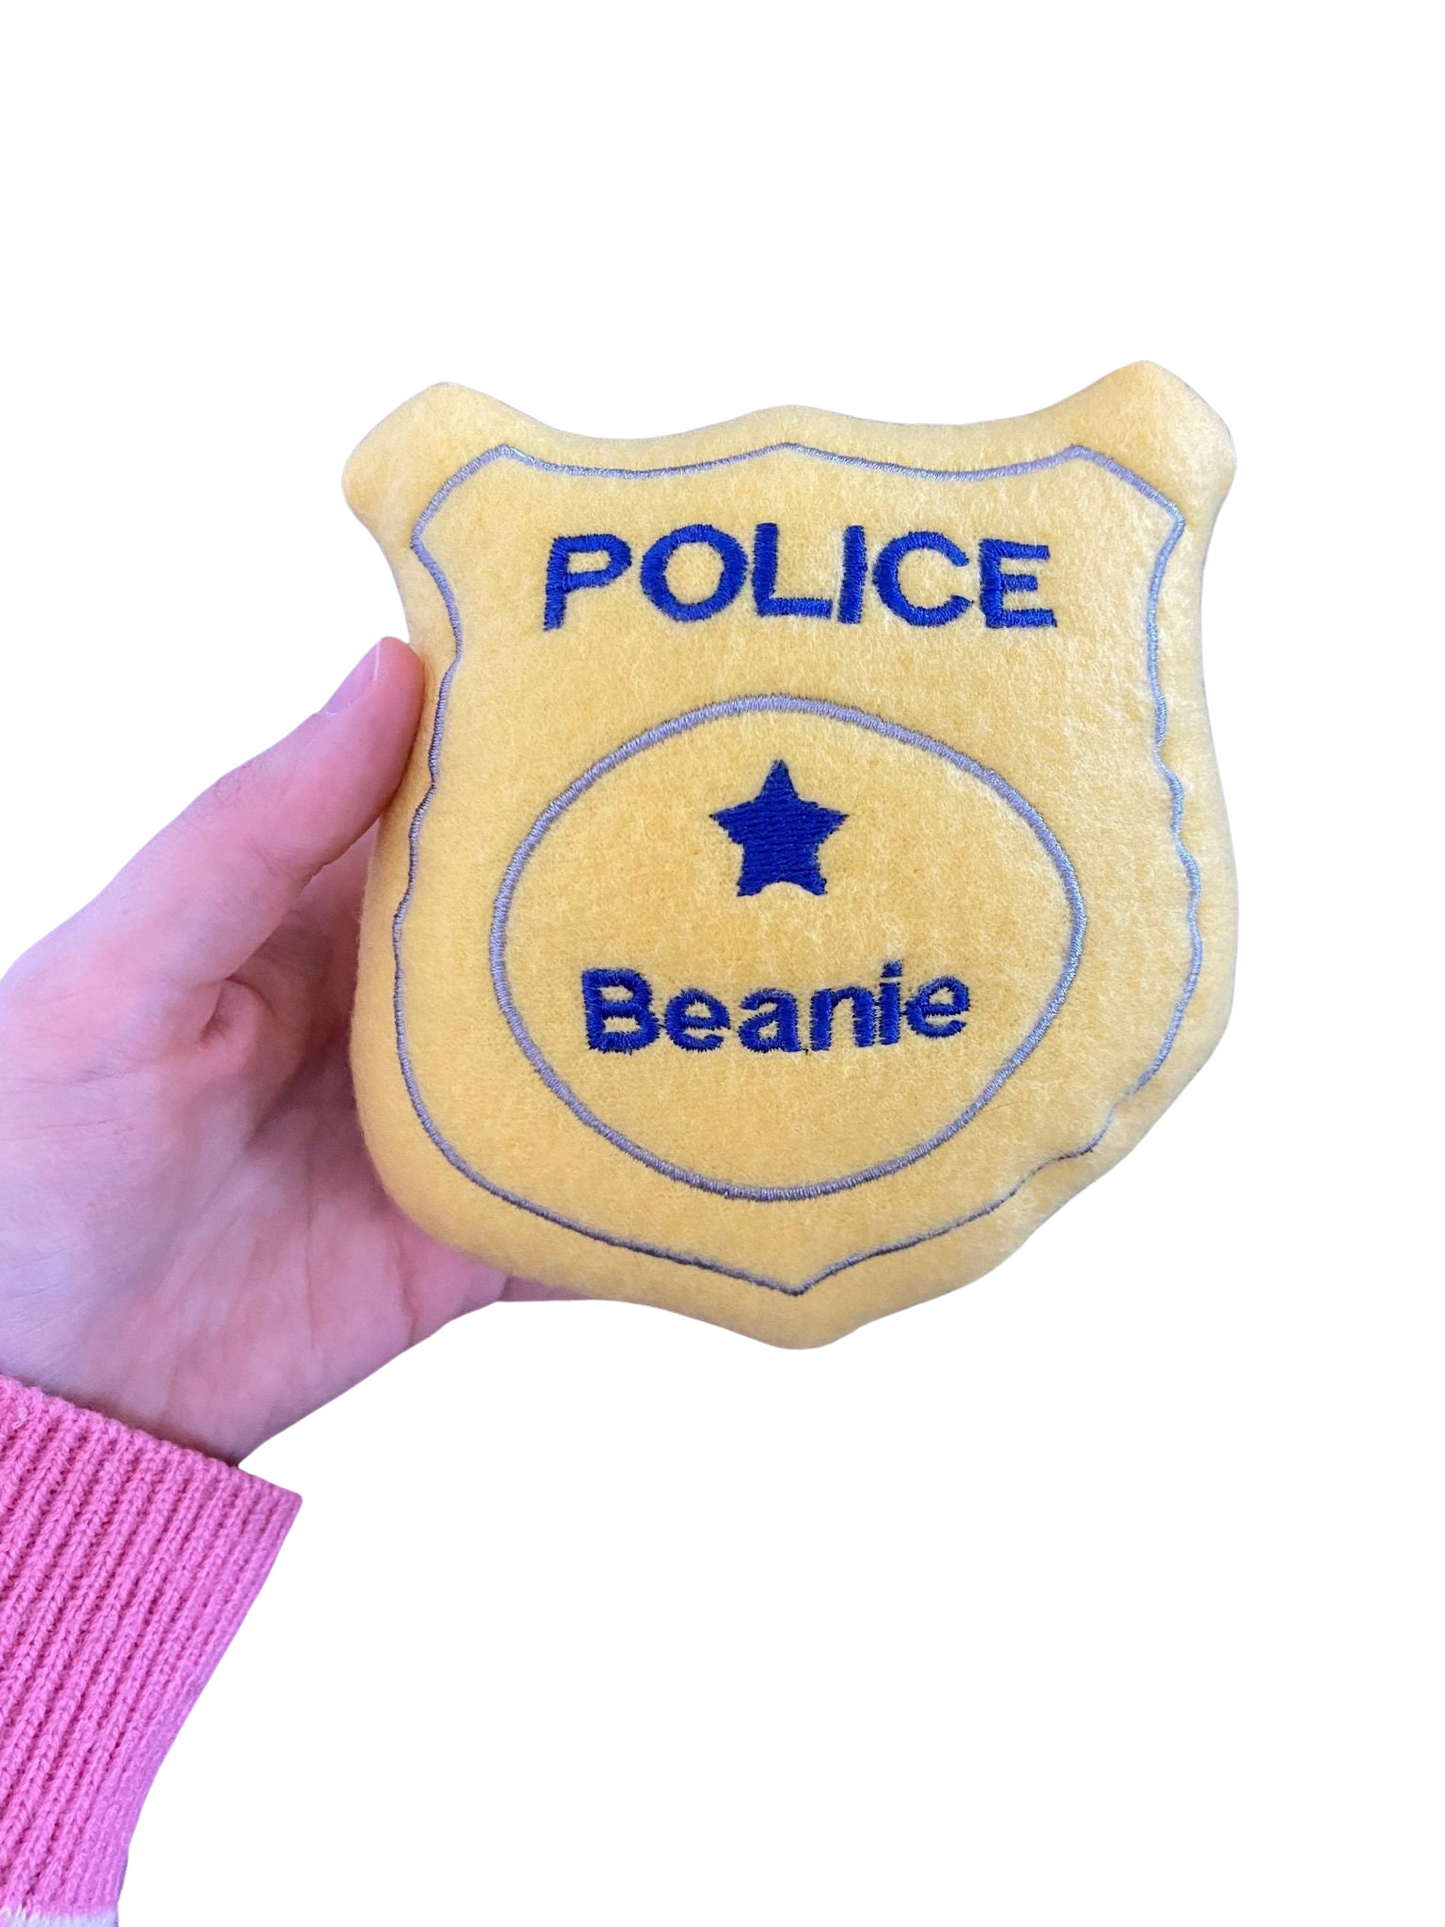 Police Badge Custom Dog Toy - Personalized Squeaky Toy Dog Toys   